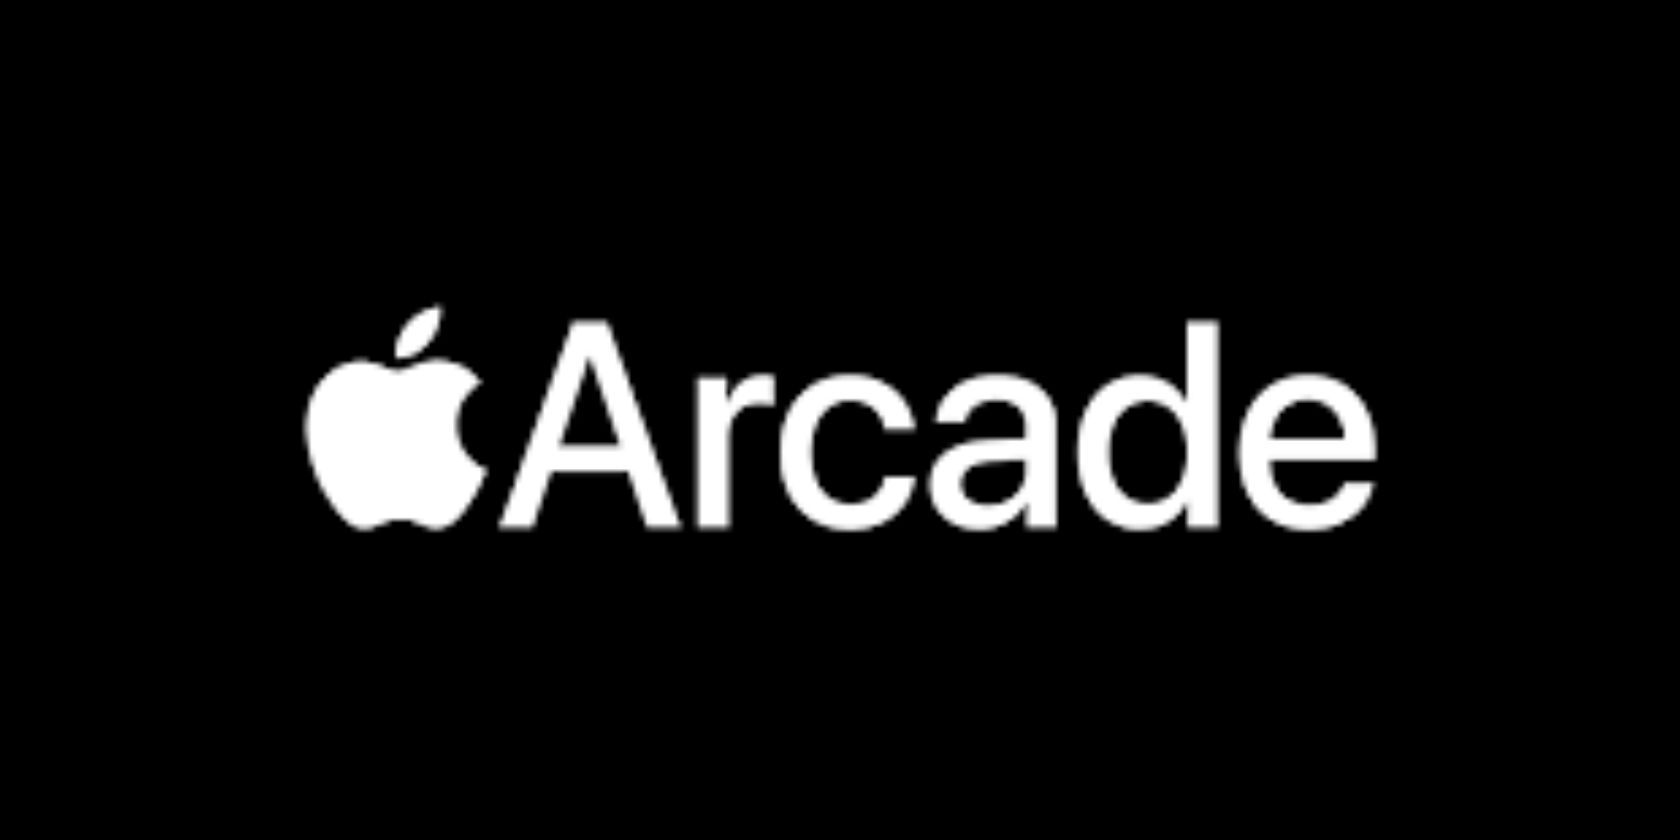 Apple Arcade Logo